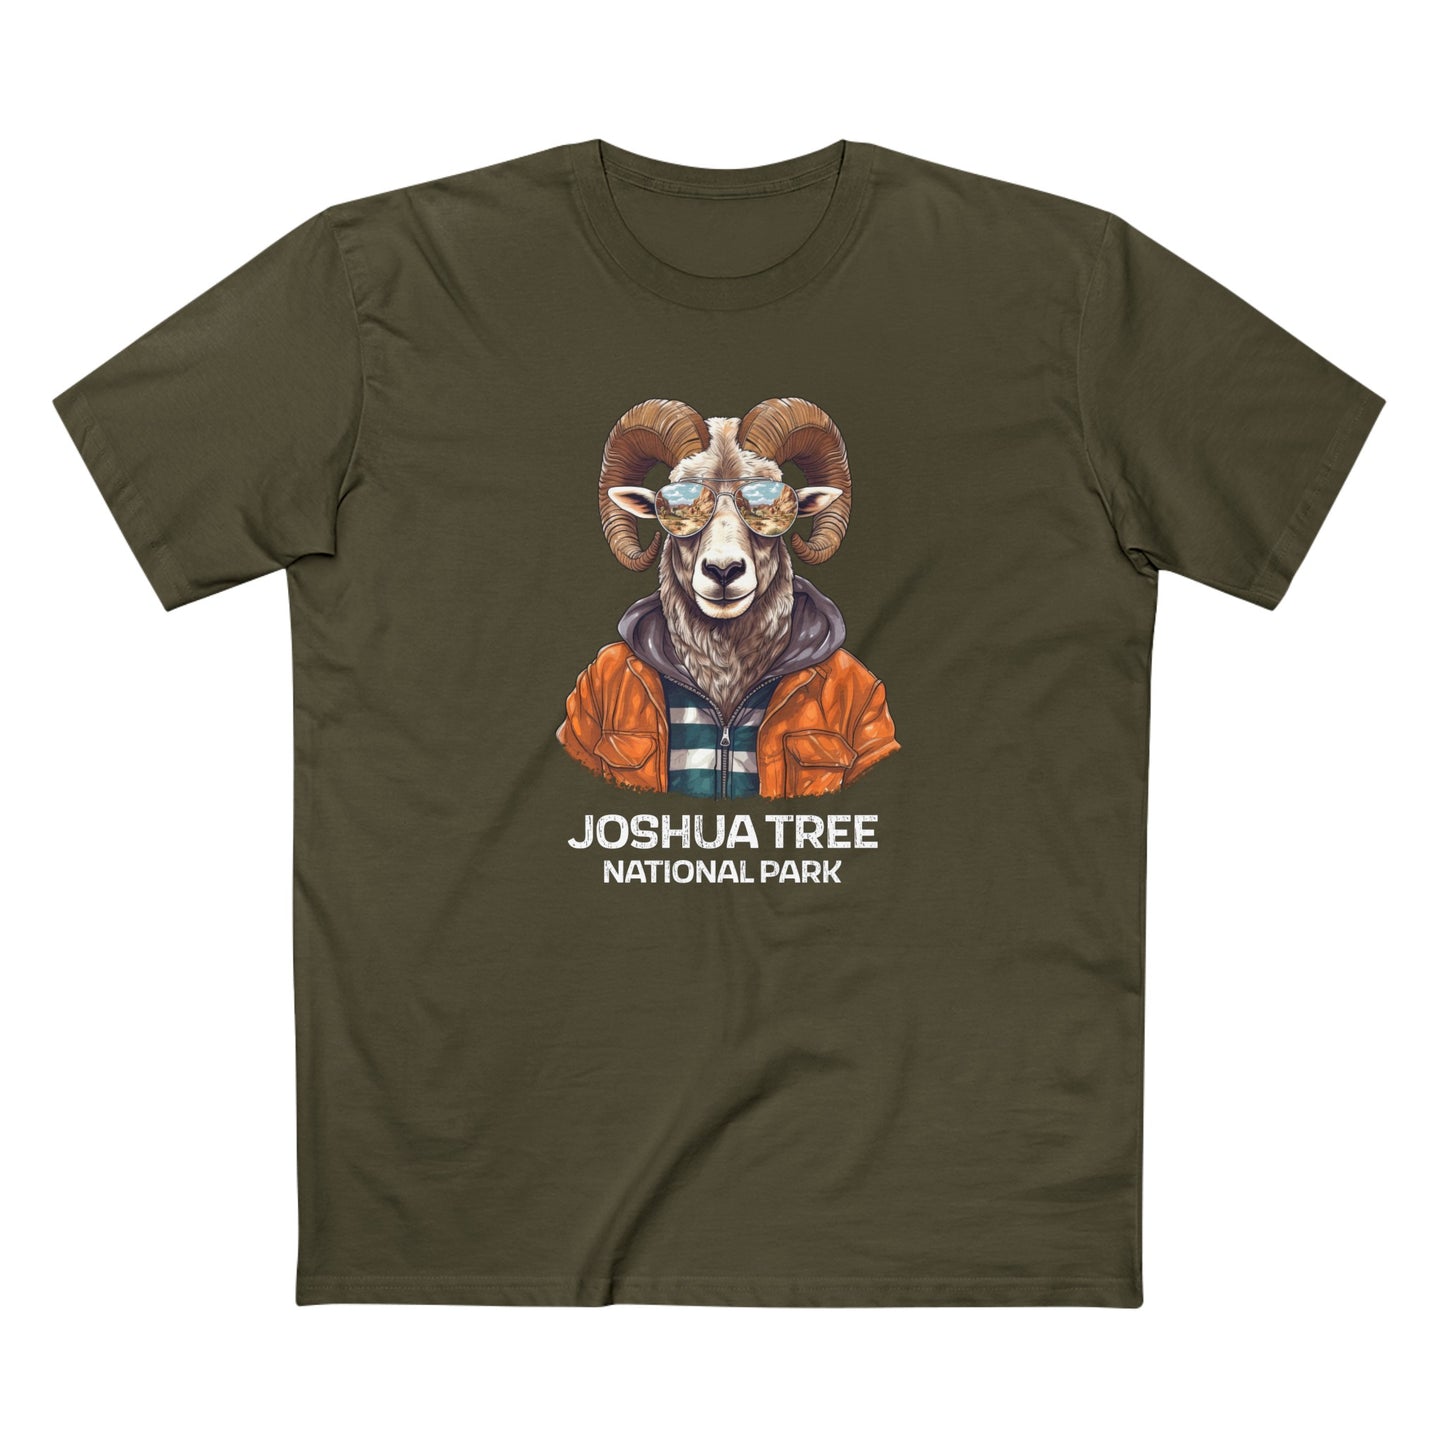 Joshua Tree National Park T-Shirt - Bighorn Sheep